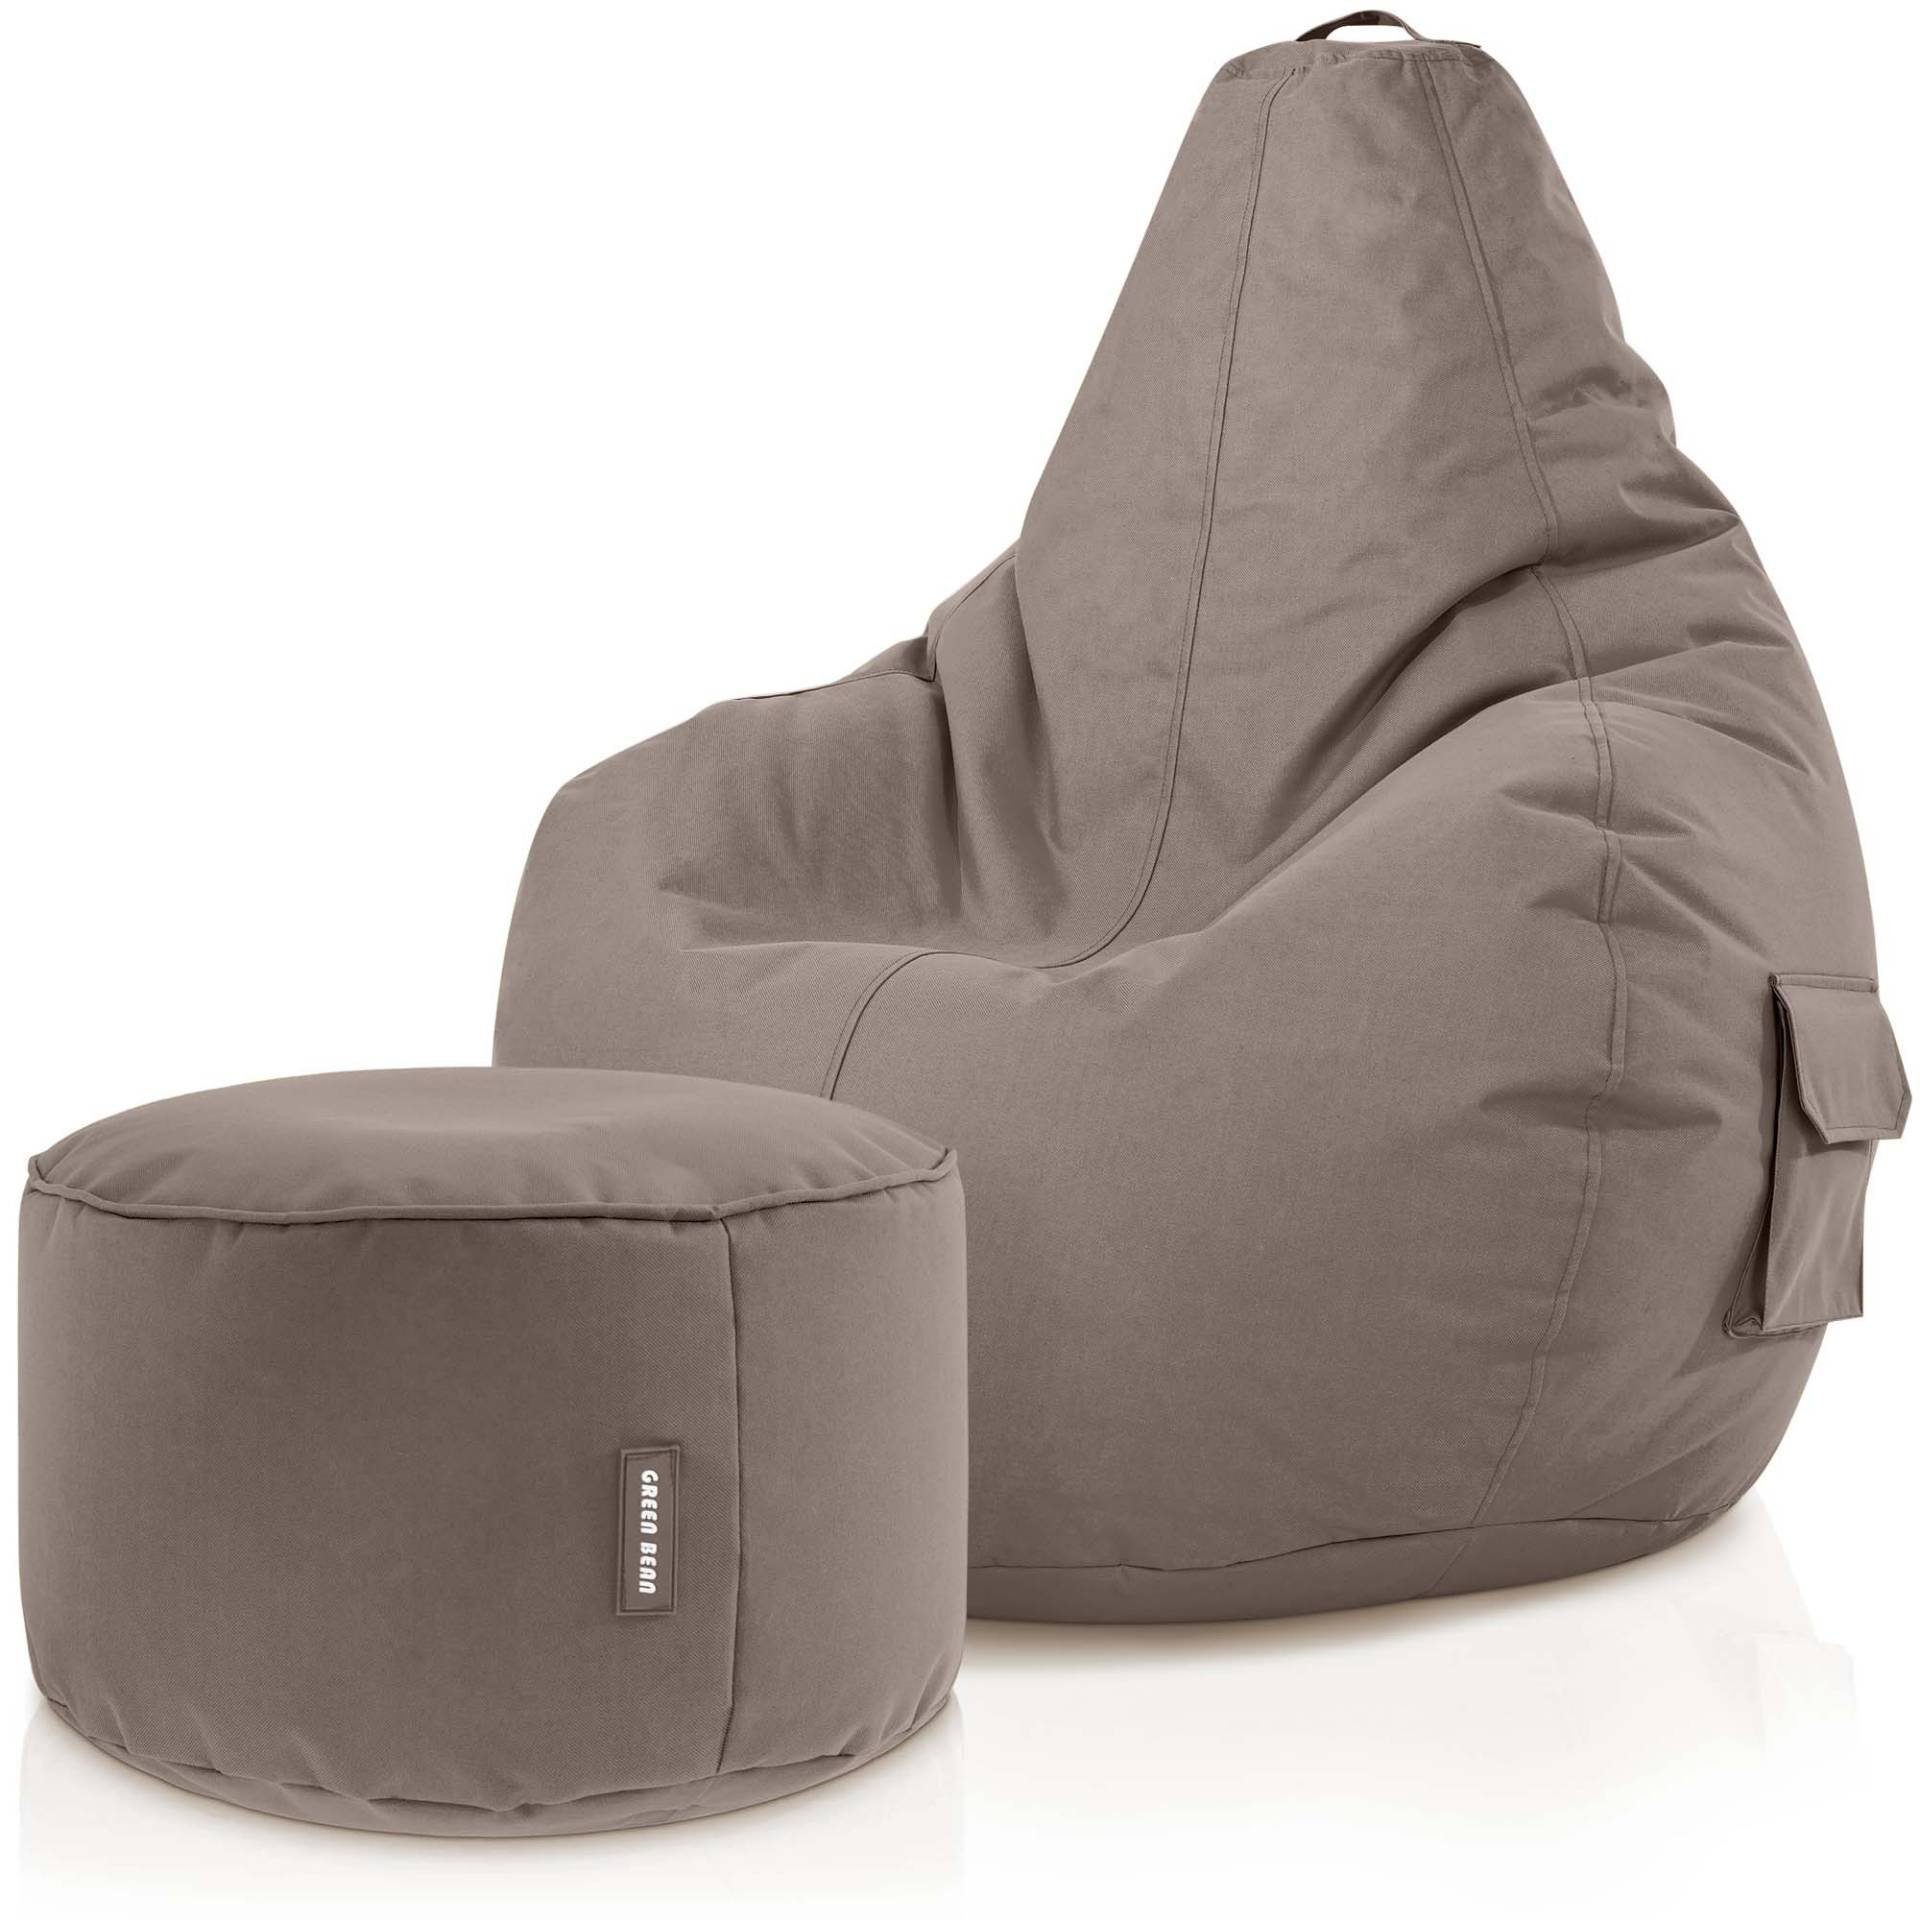 Relax-Sessel Cozy Set mit Chair Stay, Khaki Gaming Sitzhocker, + Bean Green Sitzsack Sitzkissen,